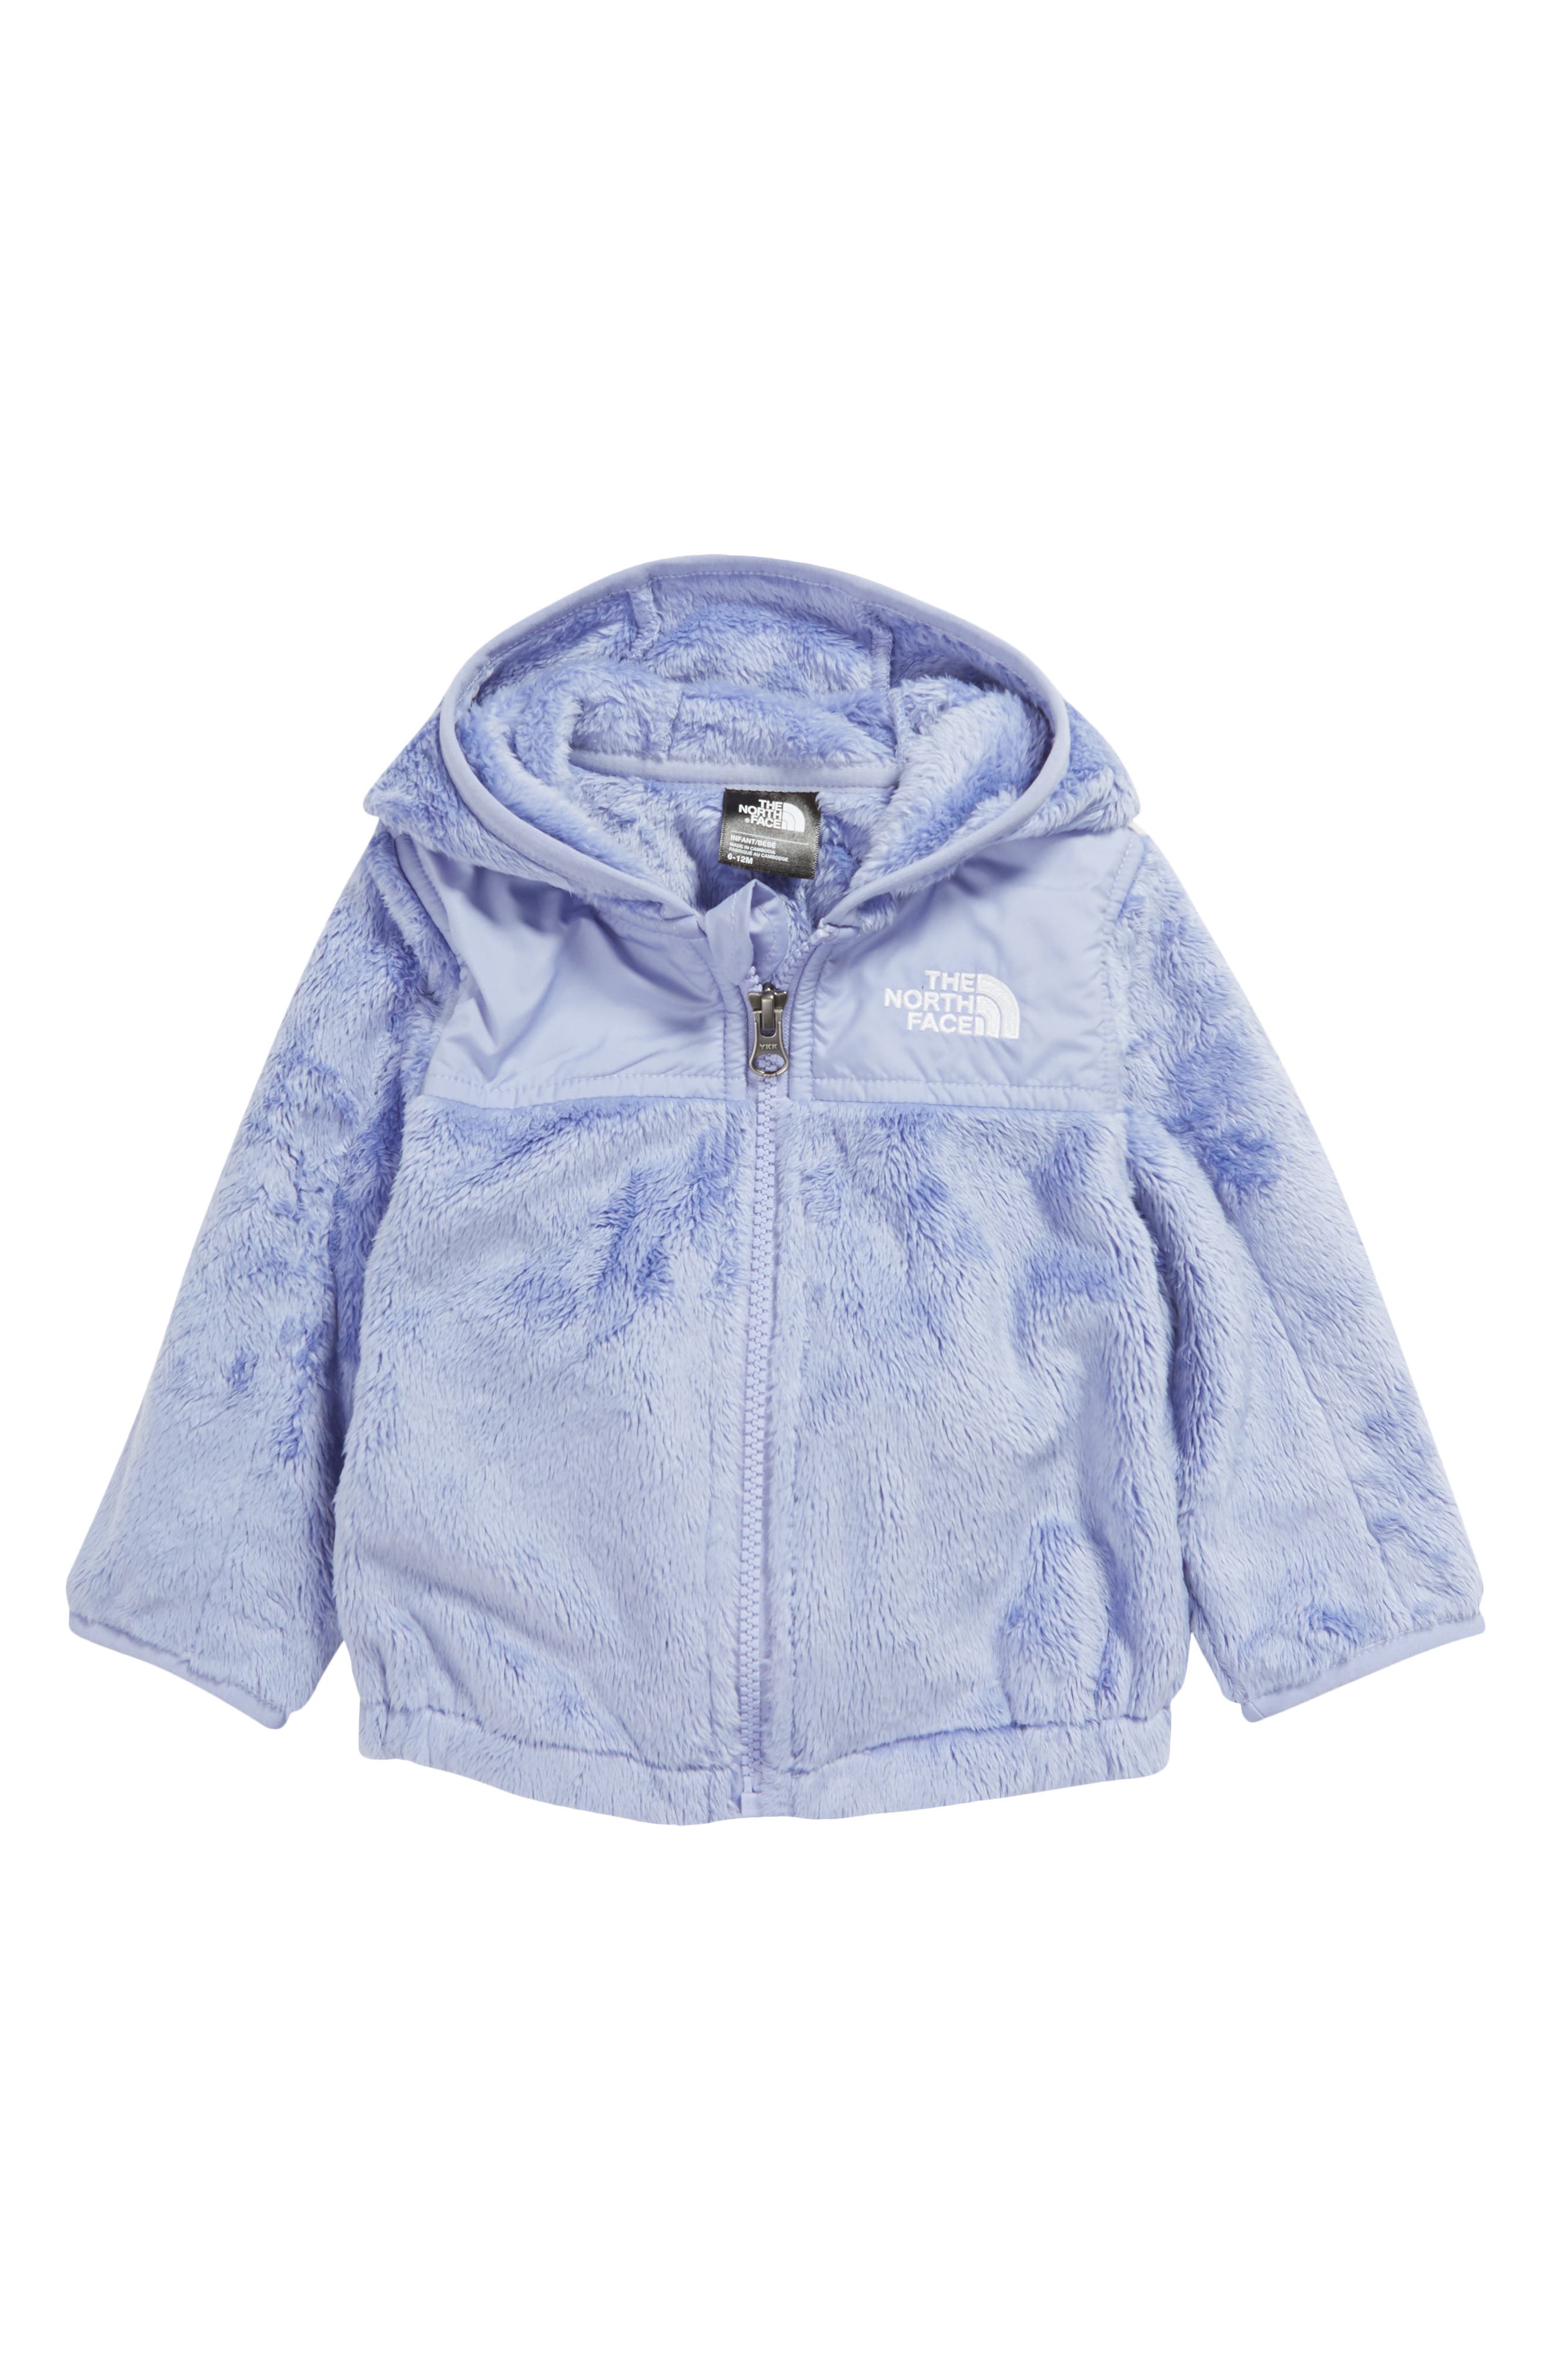 nike infant winter coat